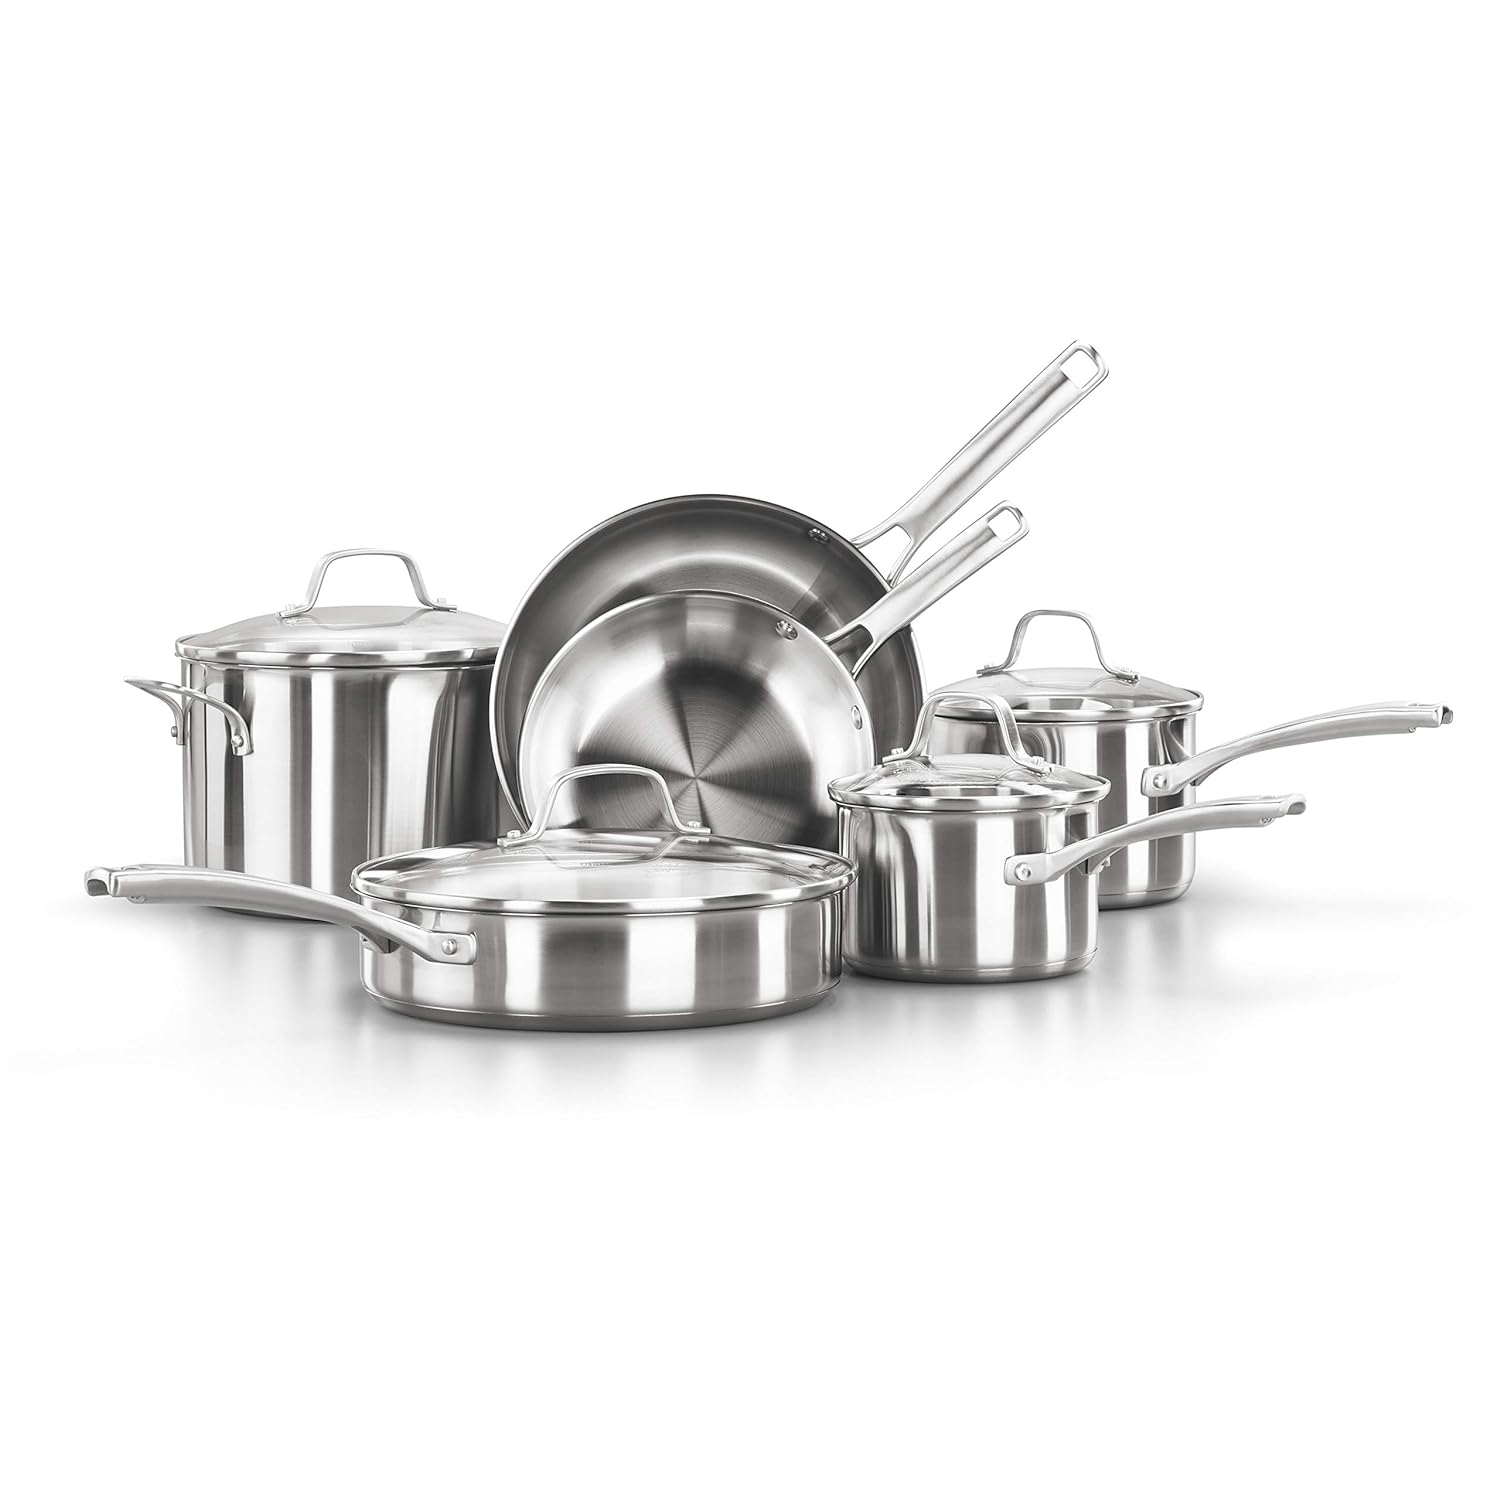 Buy The Calphalon Classic Pots And Pans Set 10 Piece Cookware Set On Amazon